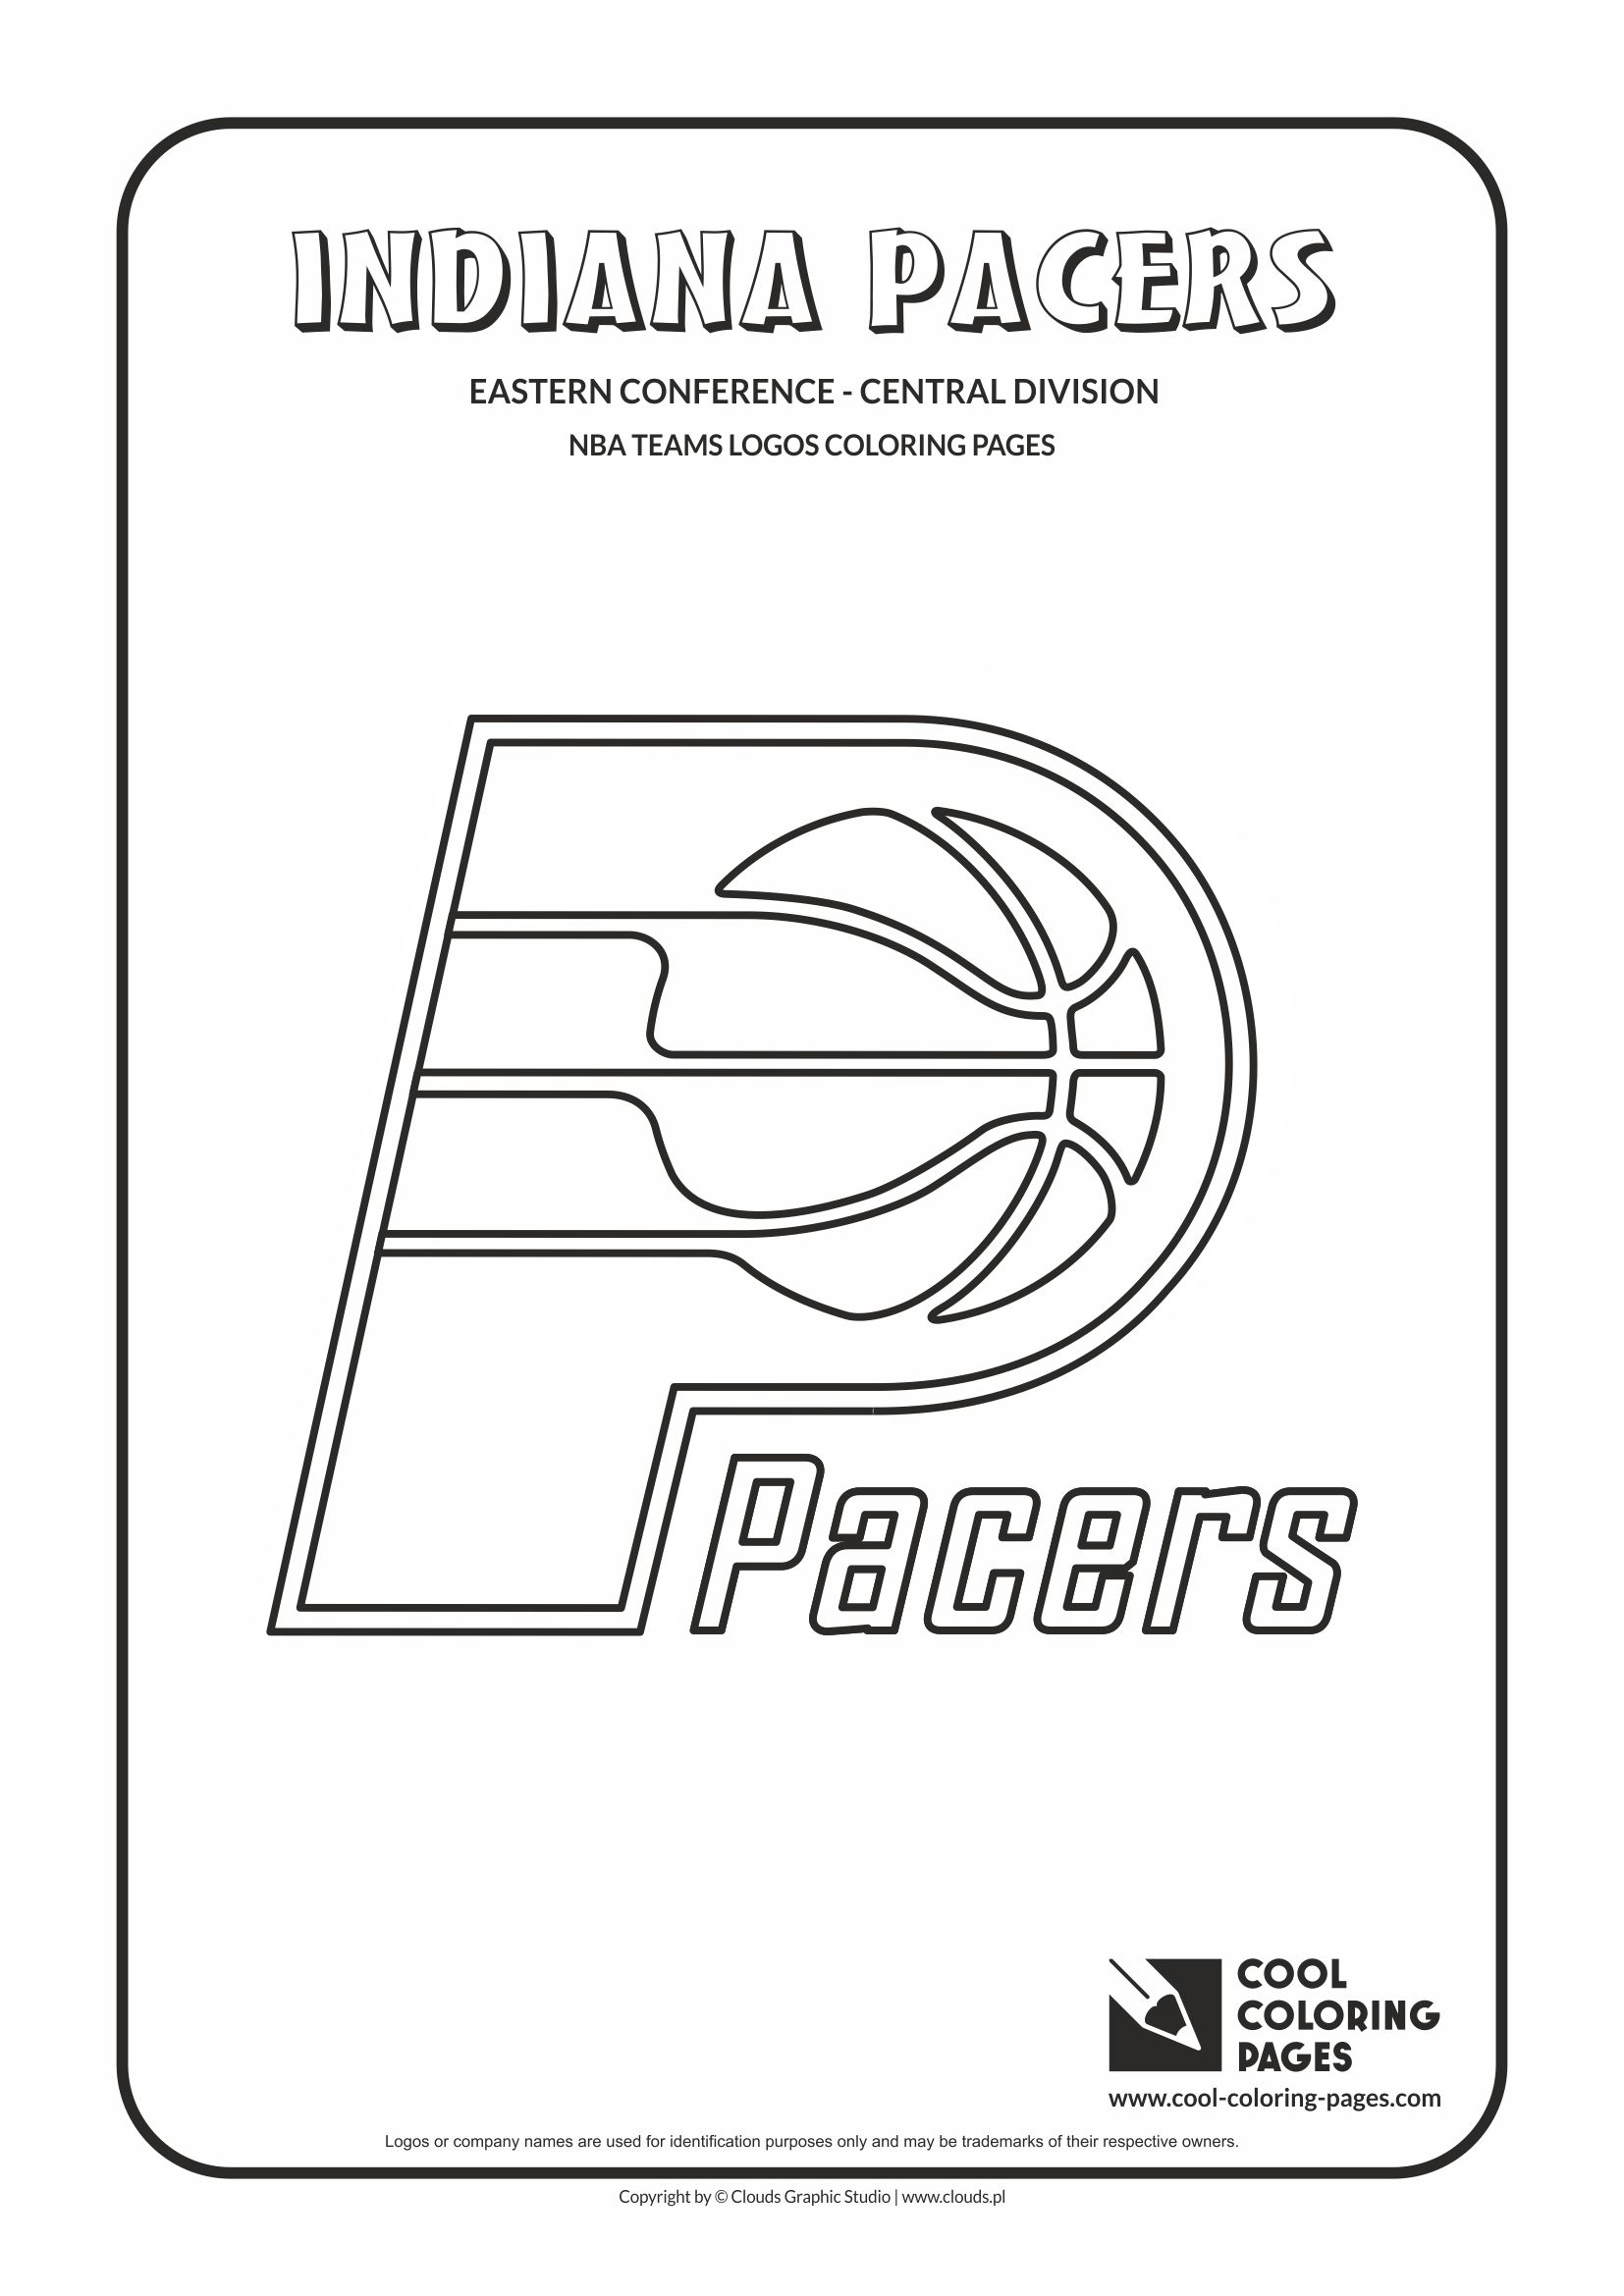 Cool Coloring Pages - NBA Teams Logos / Indiana Pacers logo / Coloring page with Indiana Pacers logo